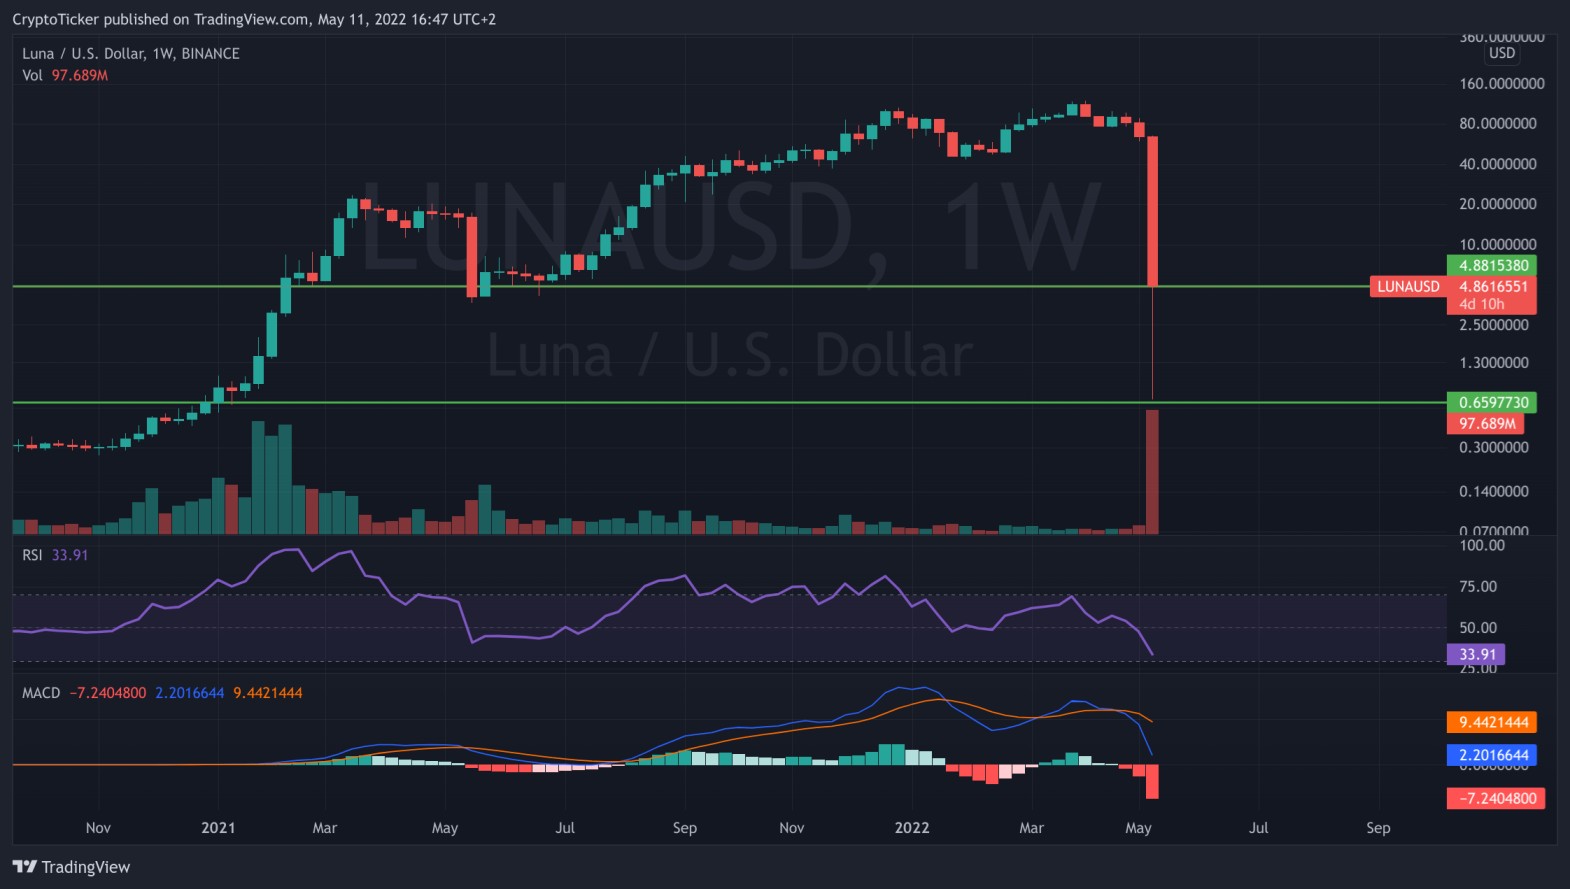 LUNA/USD 1-week chart showing the massive dump in LUNA down